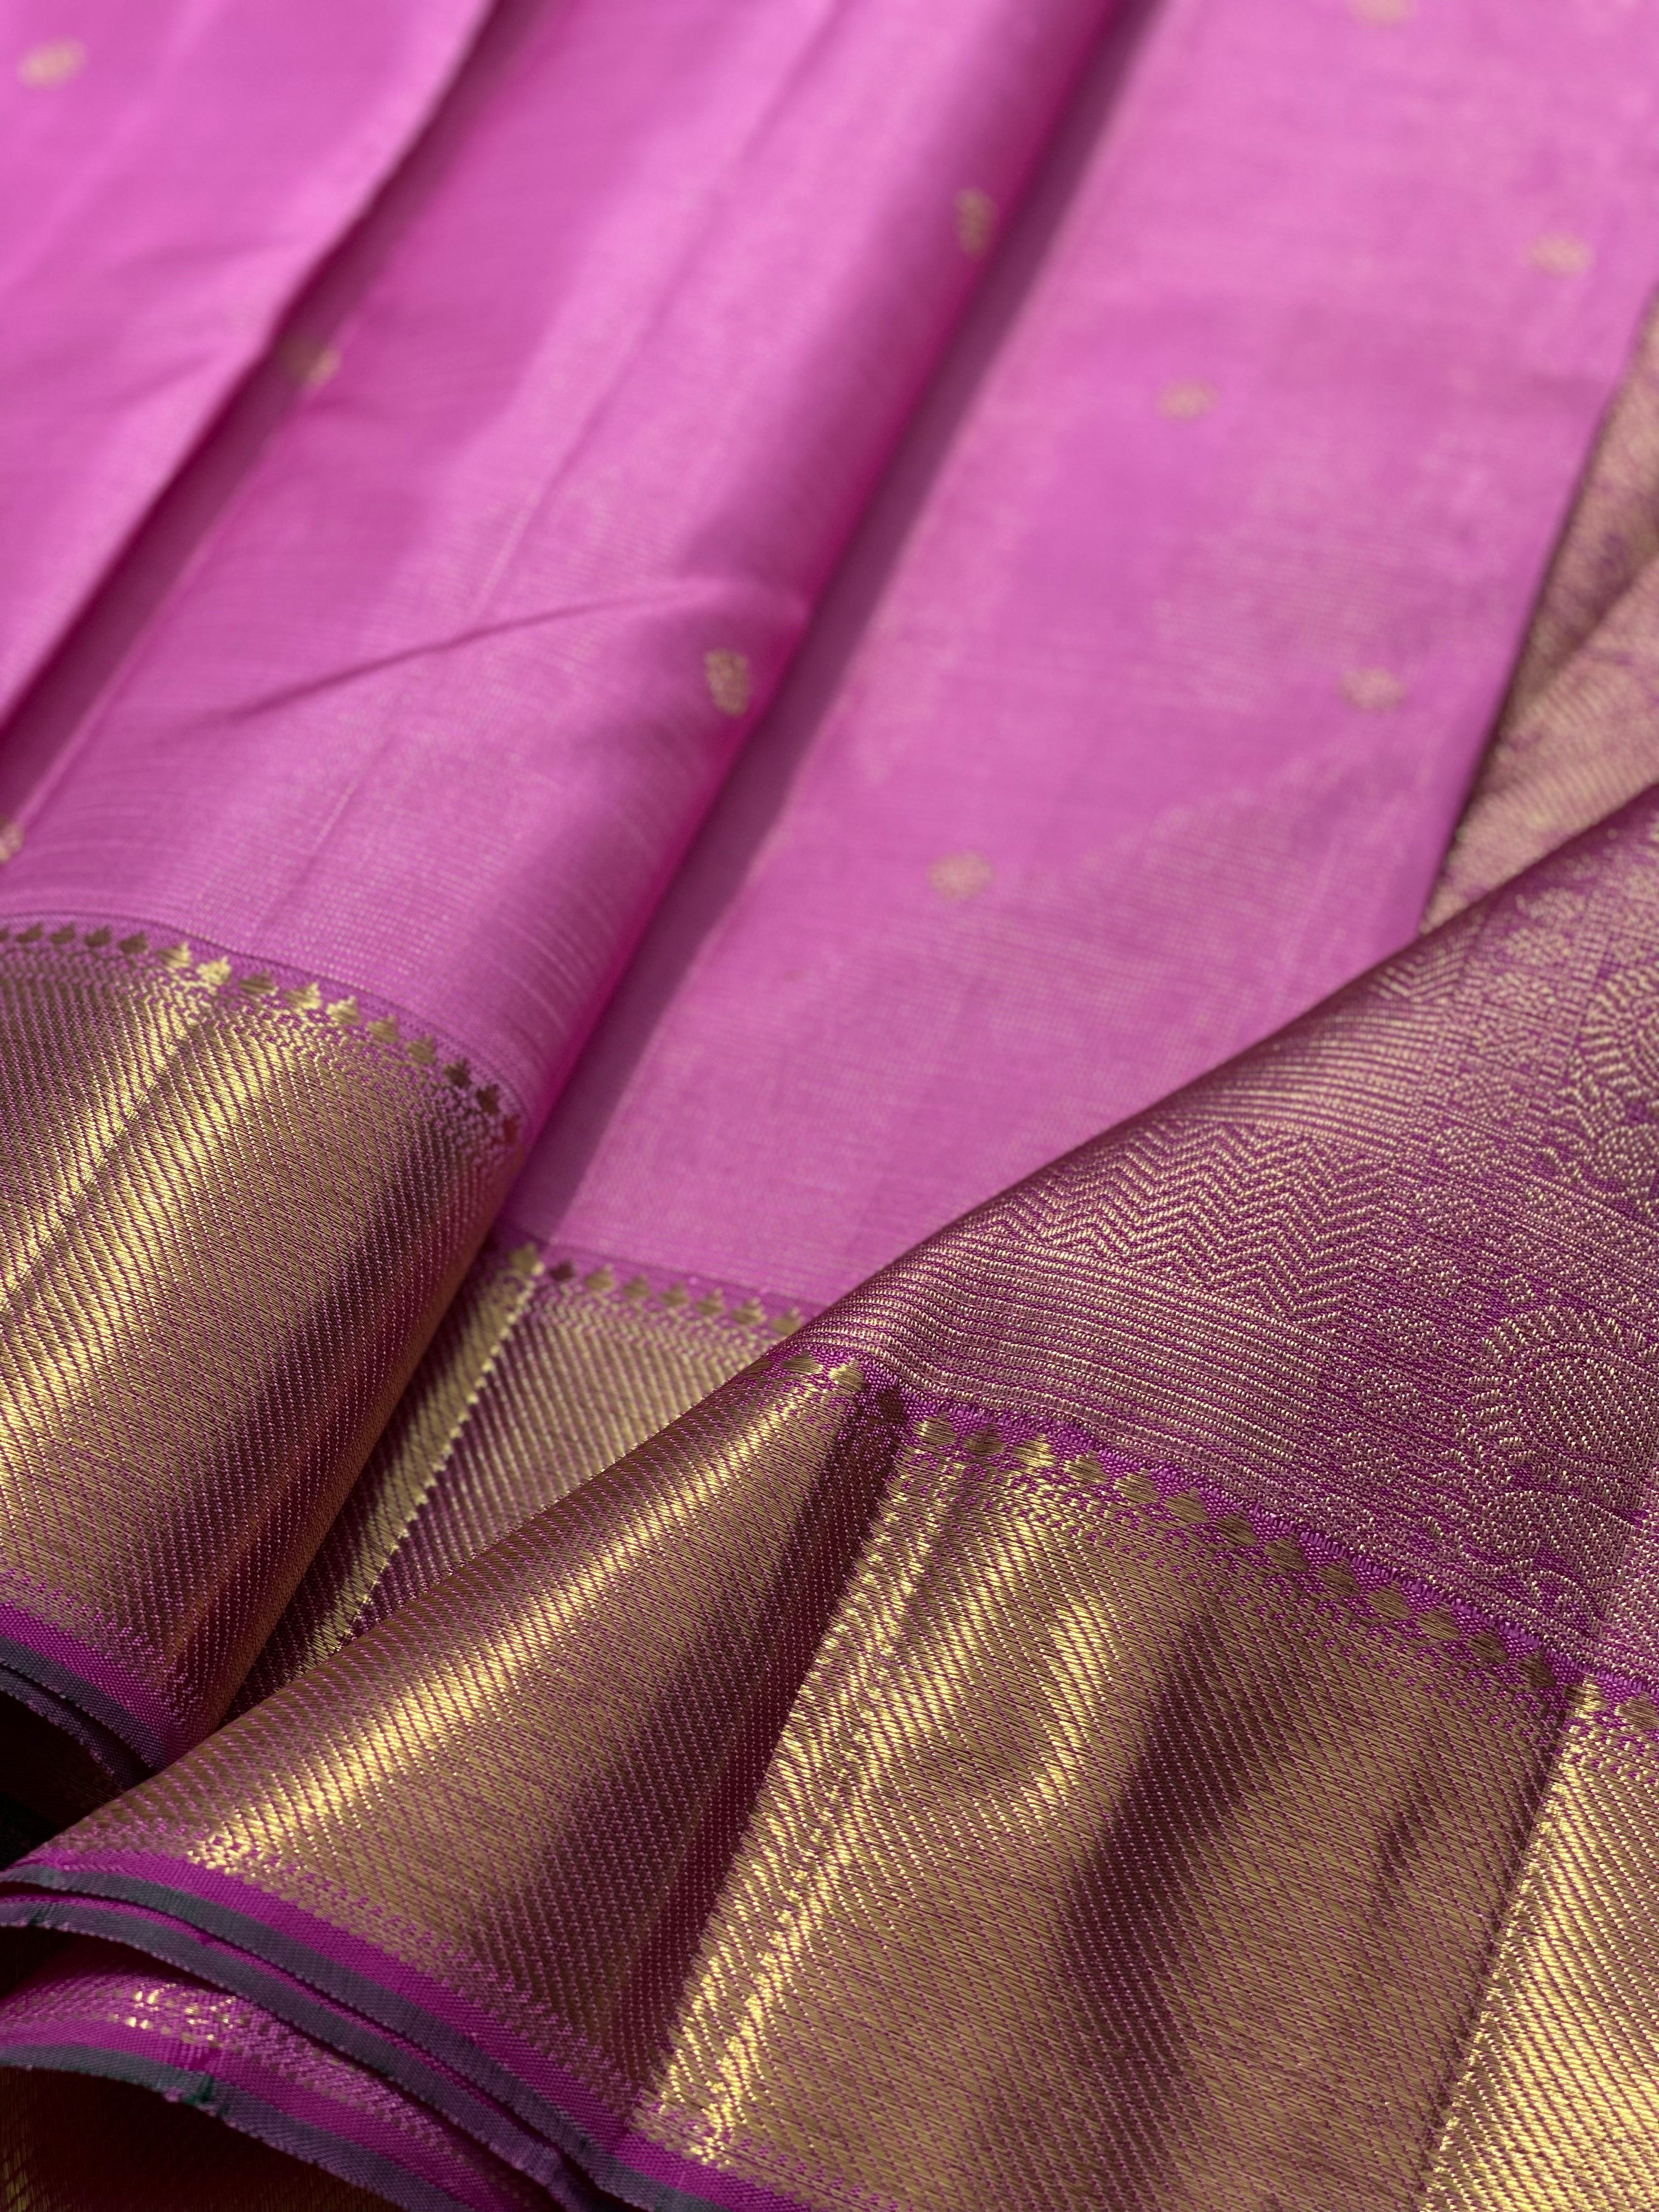 Heirloom vairaoosi kanchivaram silk saree in Lavender shade